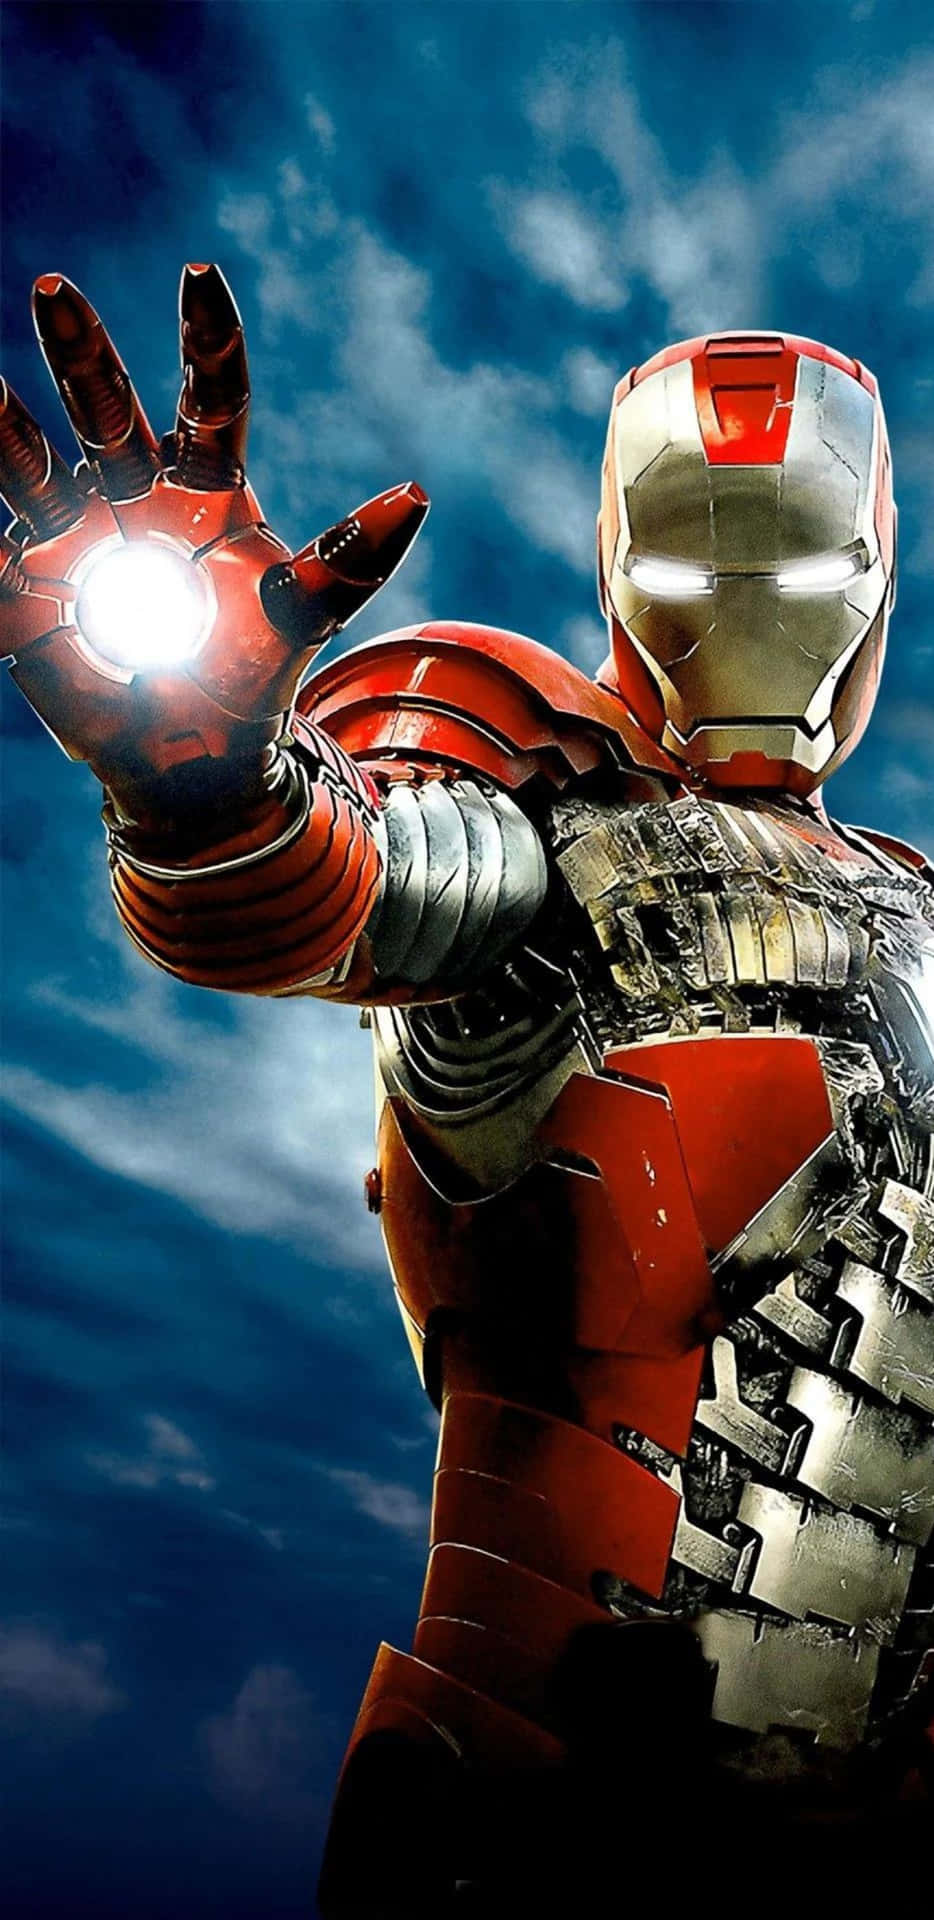 Pixel3xl Bakgrundsbild Med Iron Man Superhjälte.